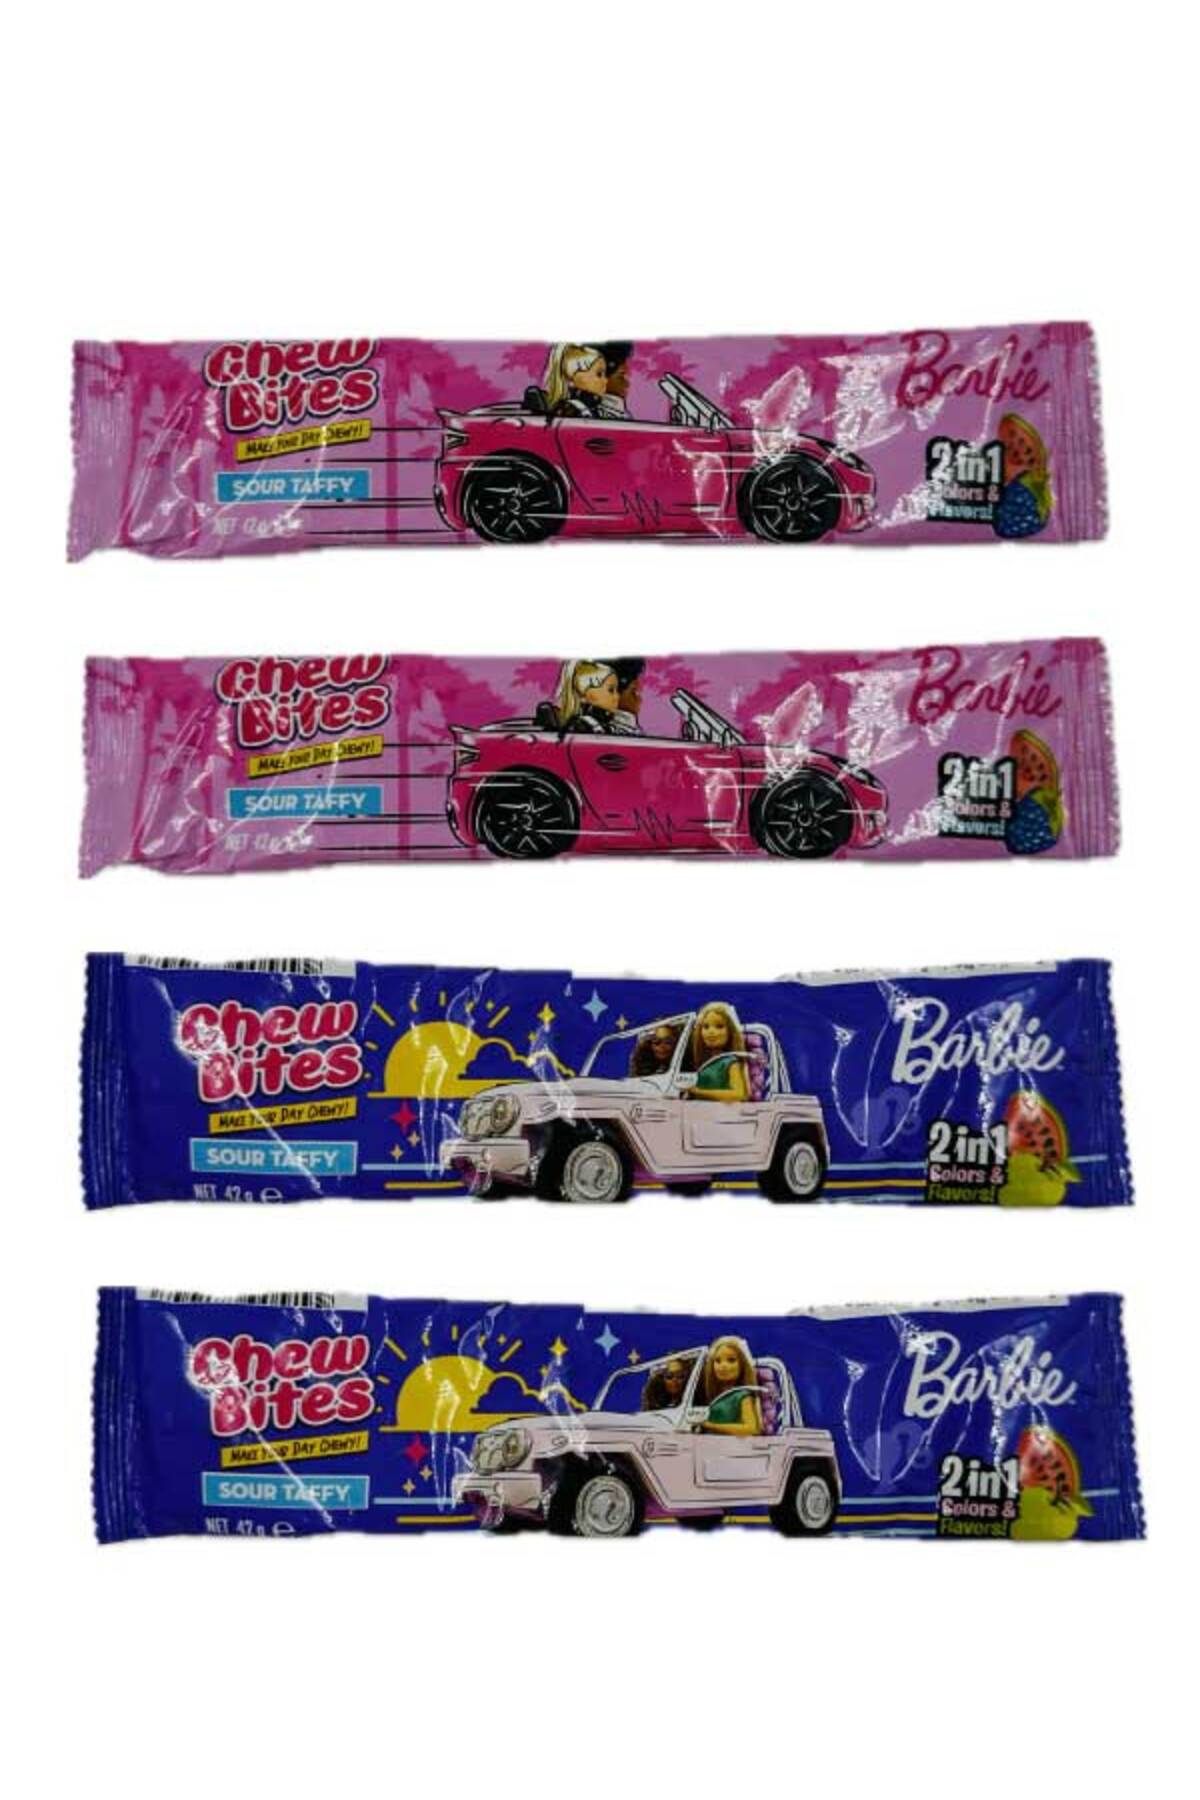 Barbie Lisanslı Chew Bites 2 in 1 Sour Taffy Yumuşak Şekerleme X 4 Paket Lezzetli İthal Şekerleme